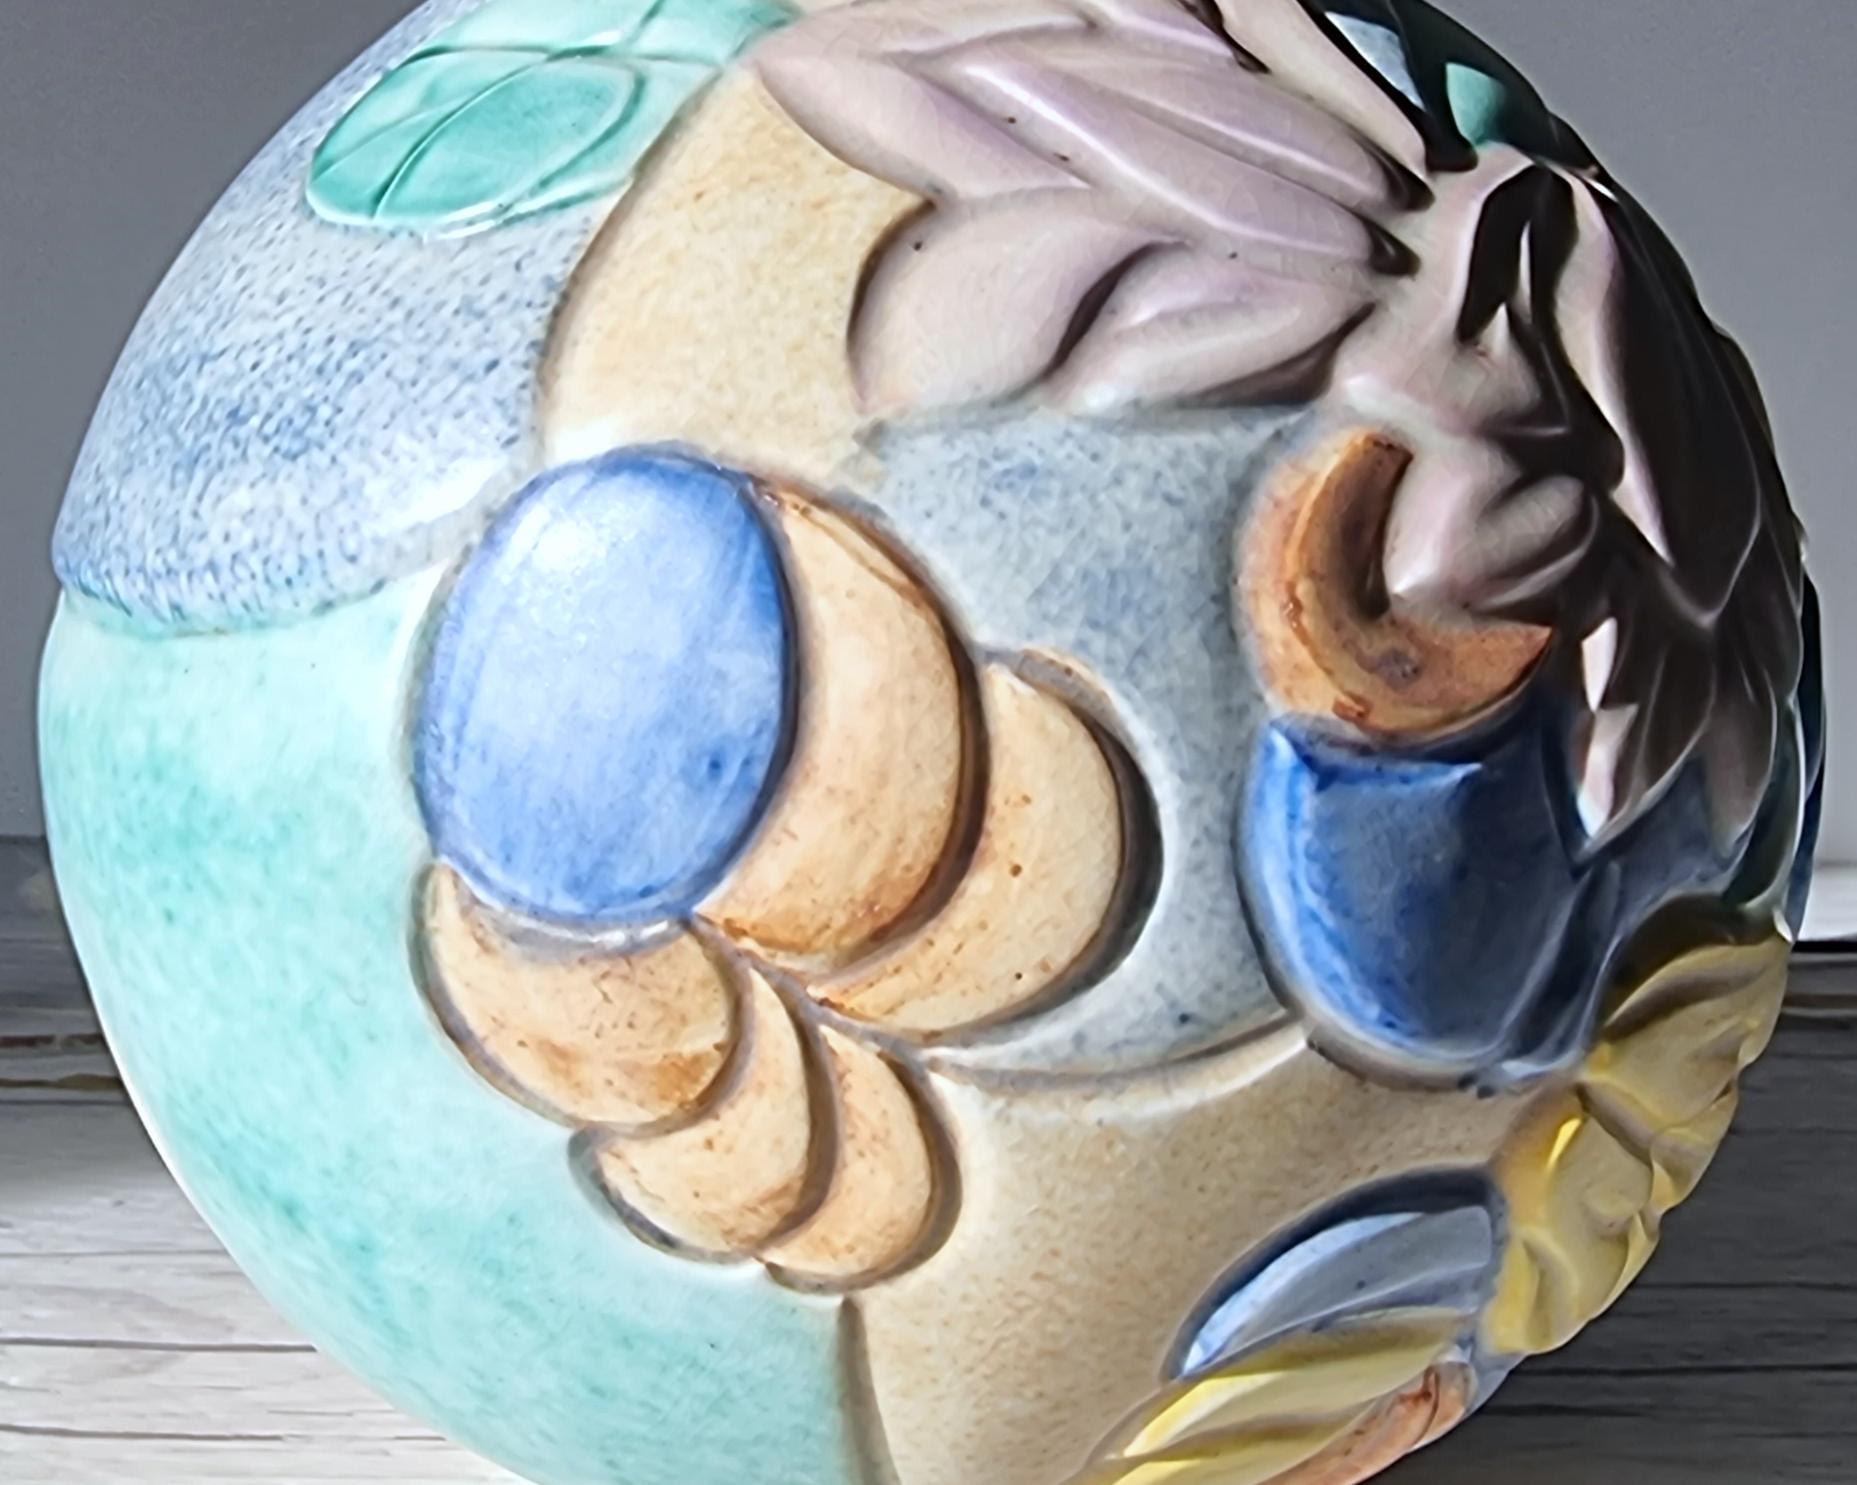 Mid-20th Century Beswick Pottery, Art Deco Satin-Matt Sherbet Palette Glaze Carved Globe Vase For Sale